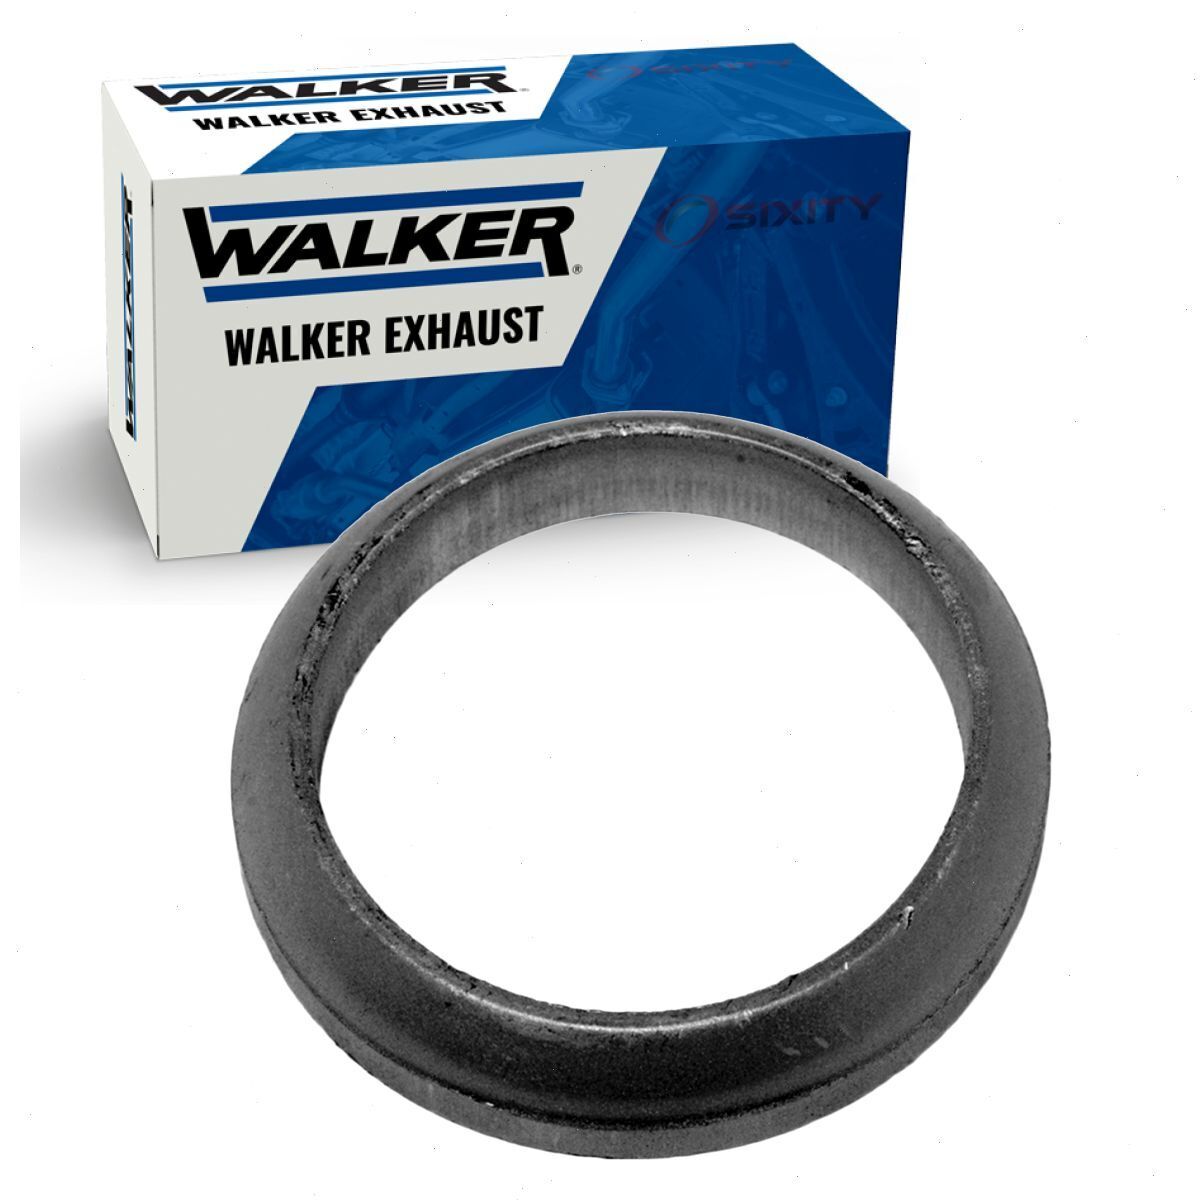 Walker 31387 Exhaust Pipe Flange Gasket for 60460 Gaskets Sealing yz